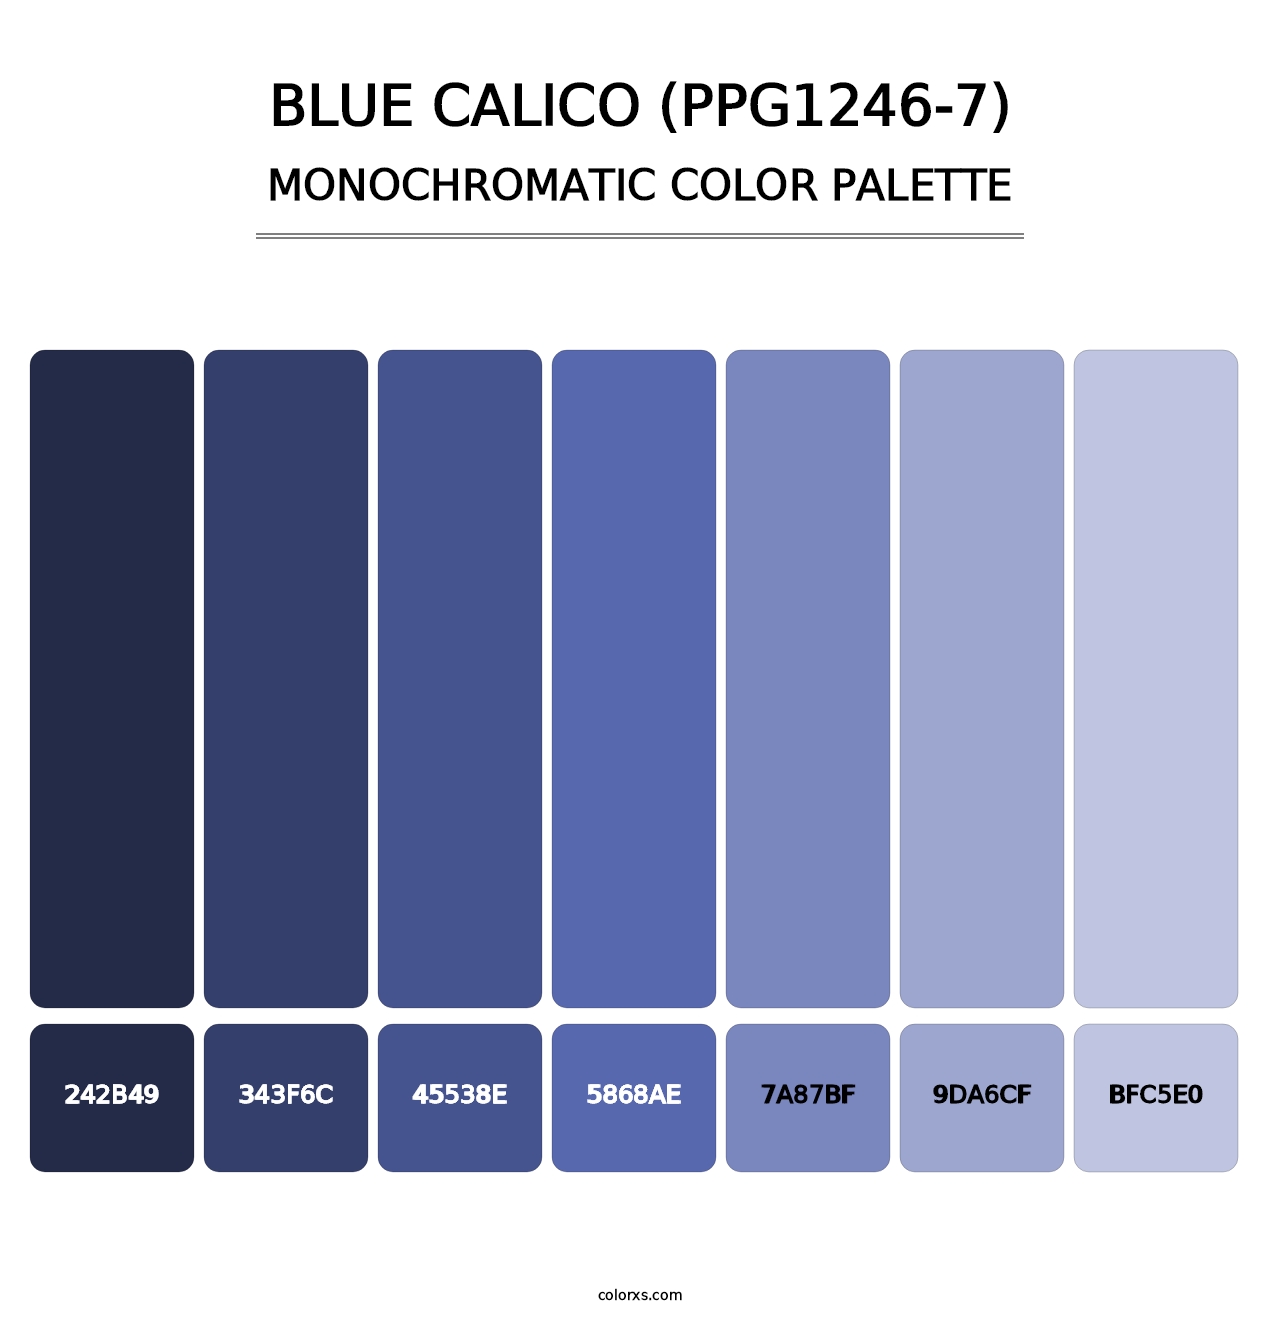 Blue Calico (PPG1246-7) - Monochromatic Color Palette